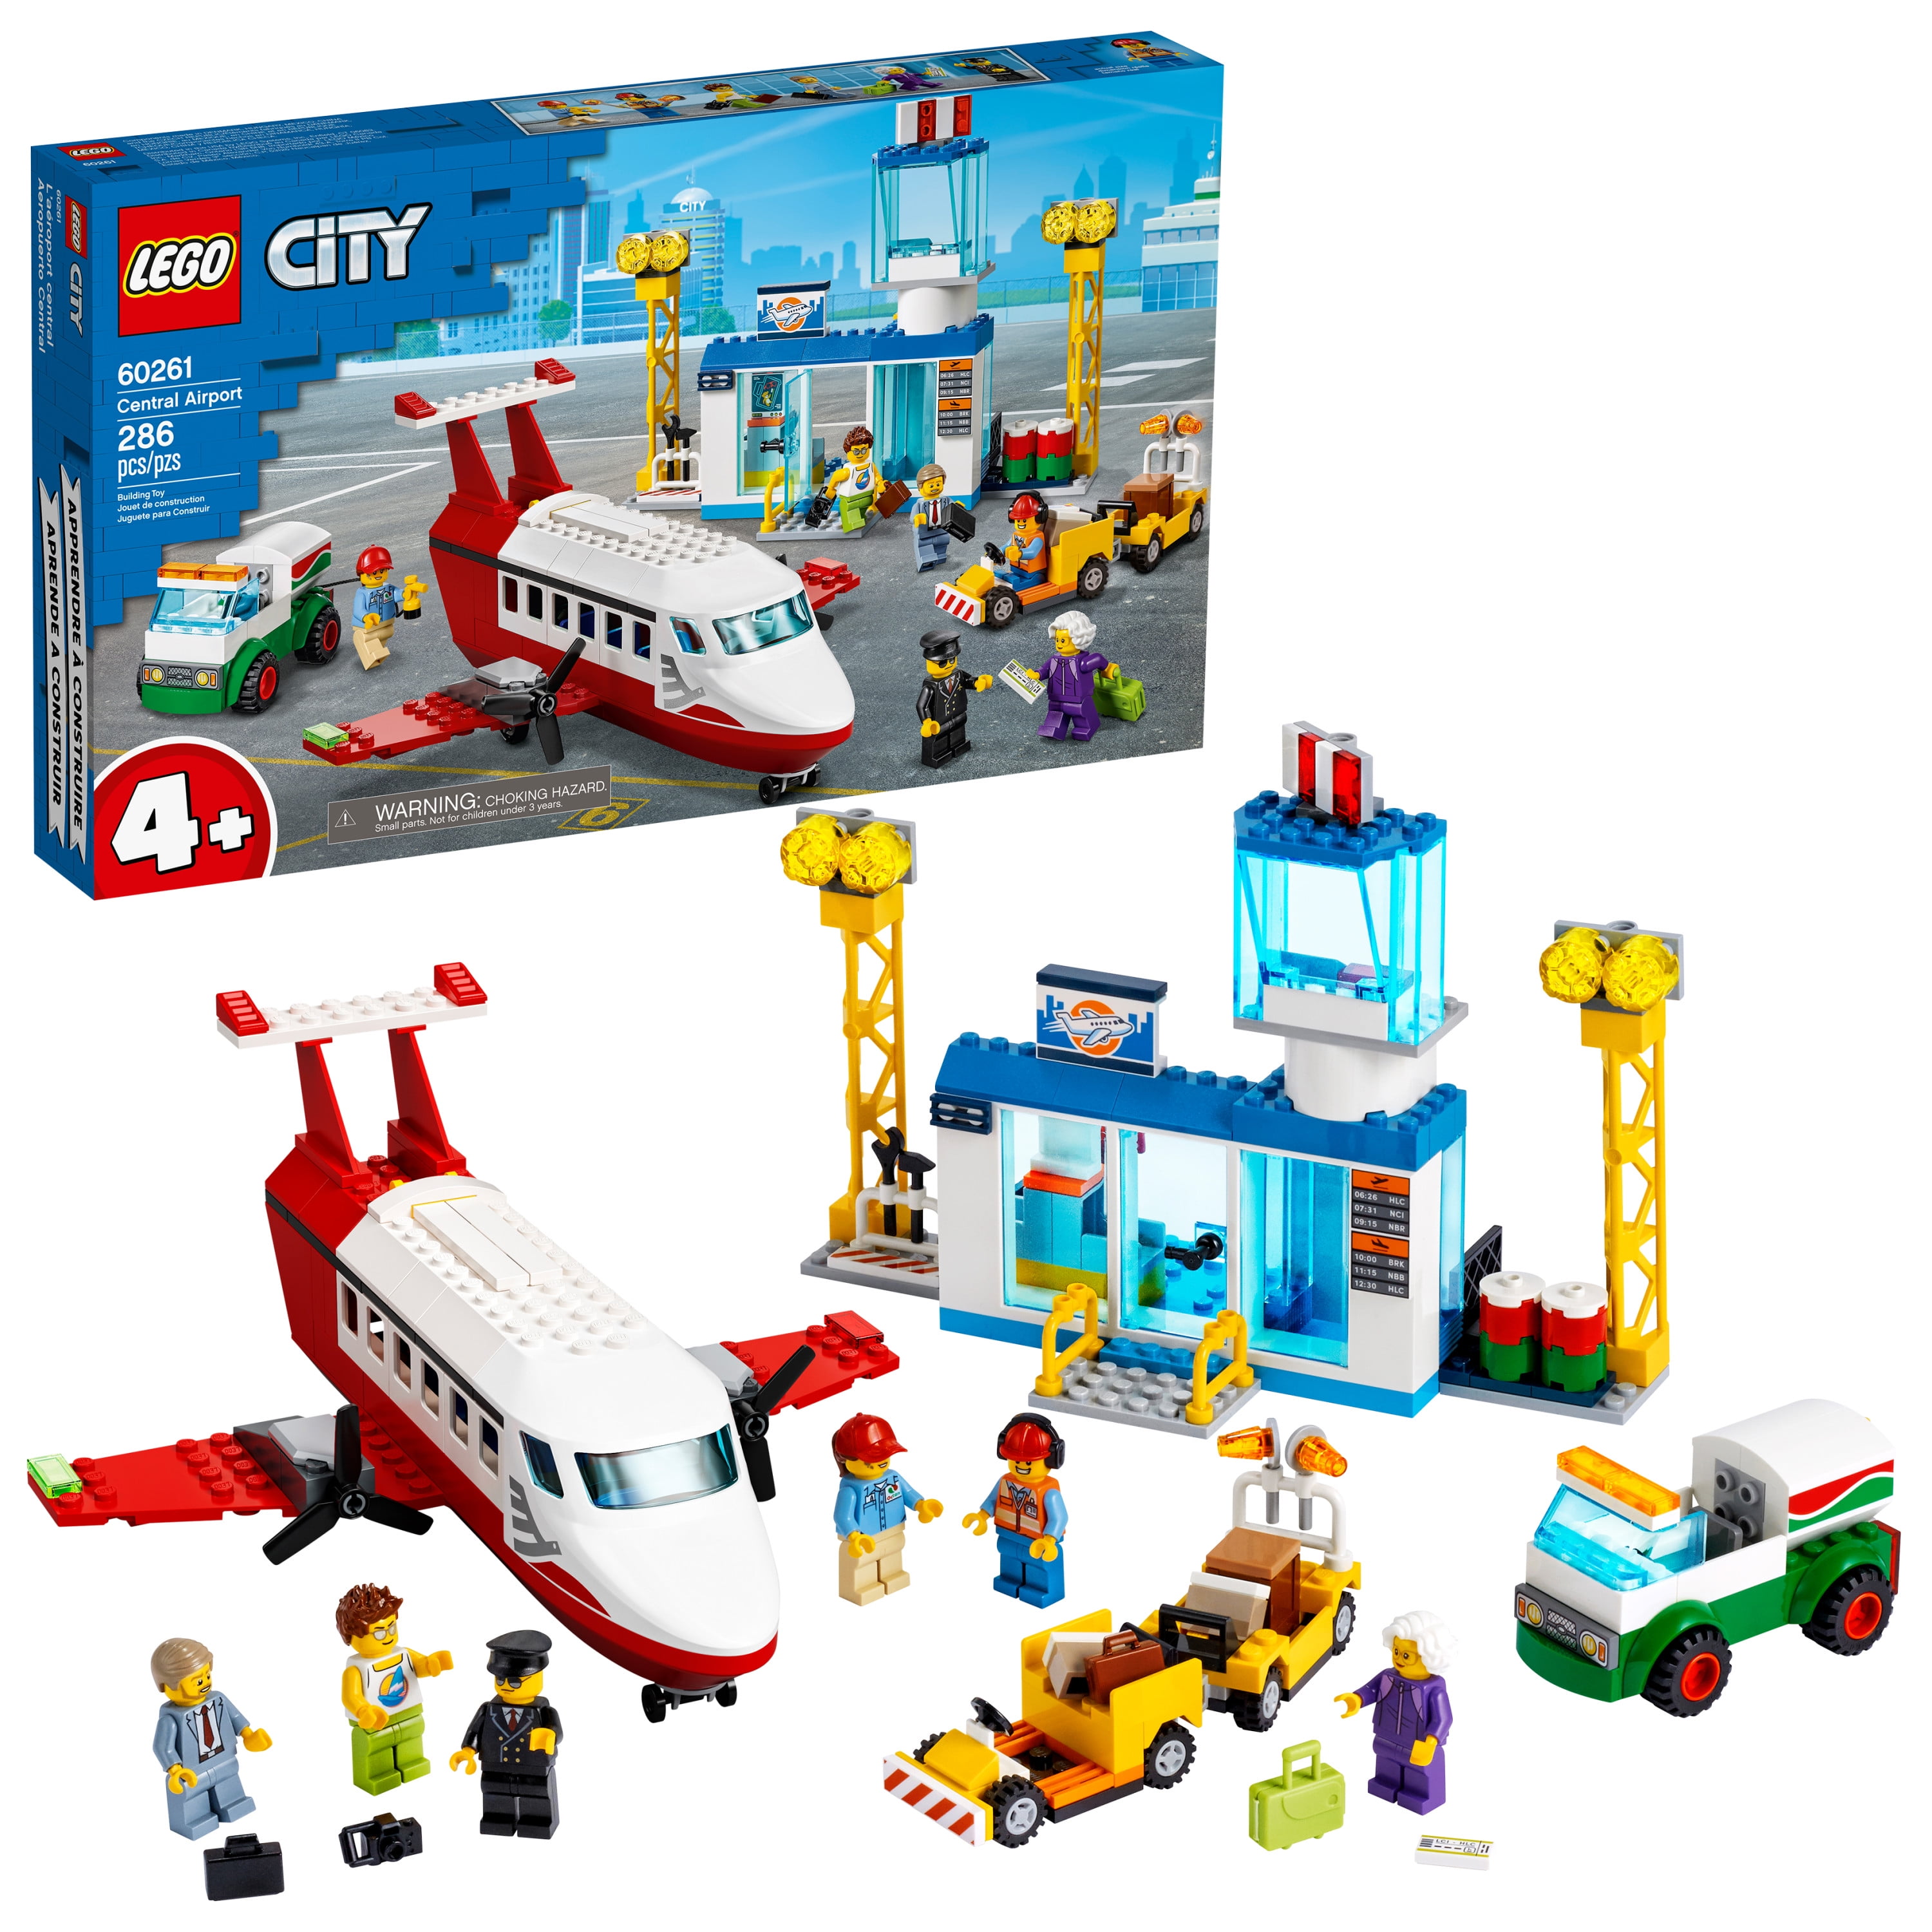 Building Blocks Sluban Bricks Toy City Passenger Airplane Airport Minifigure Set 